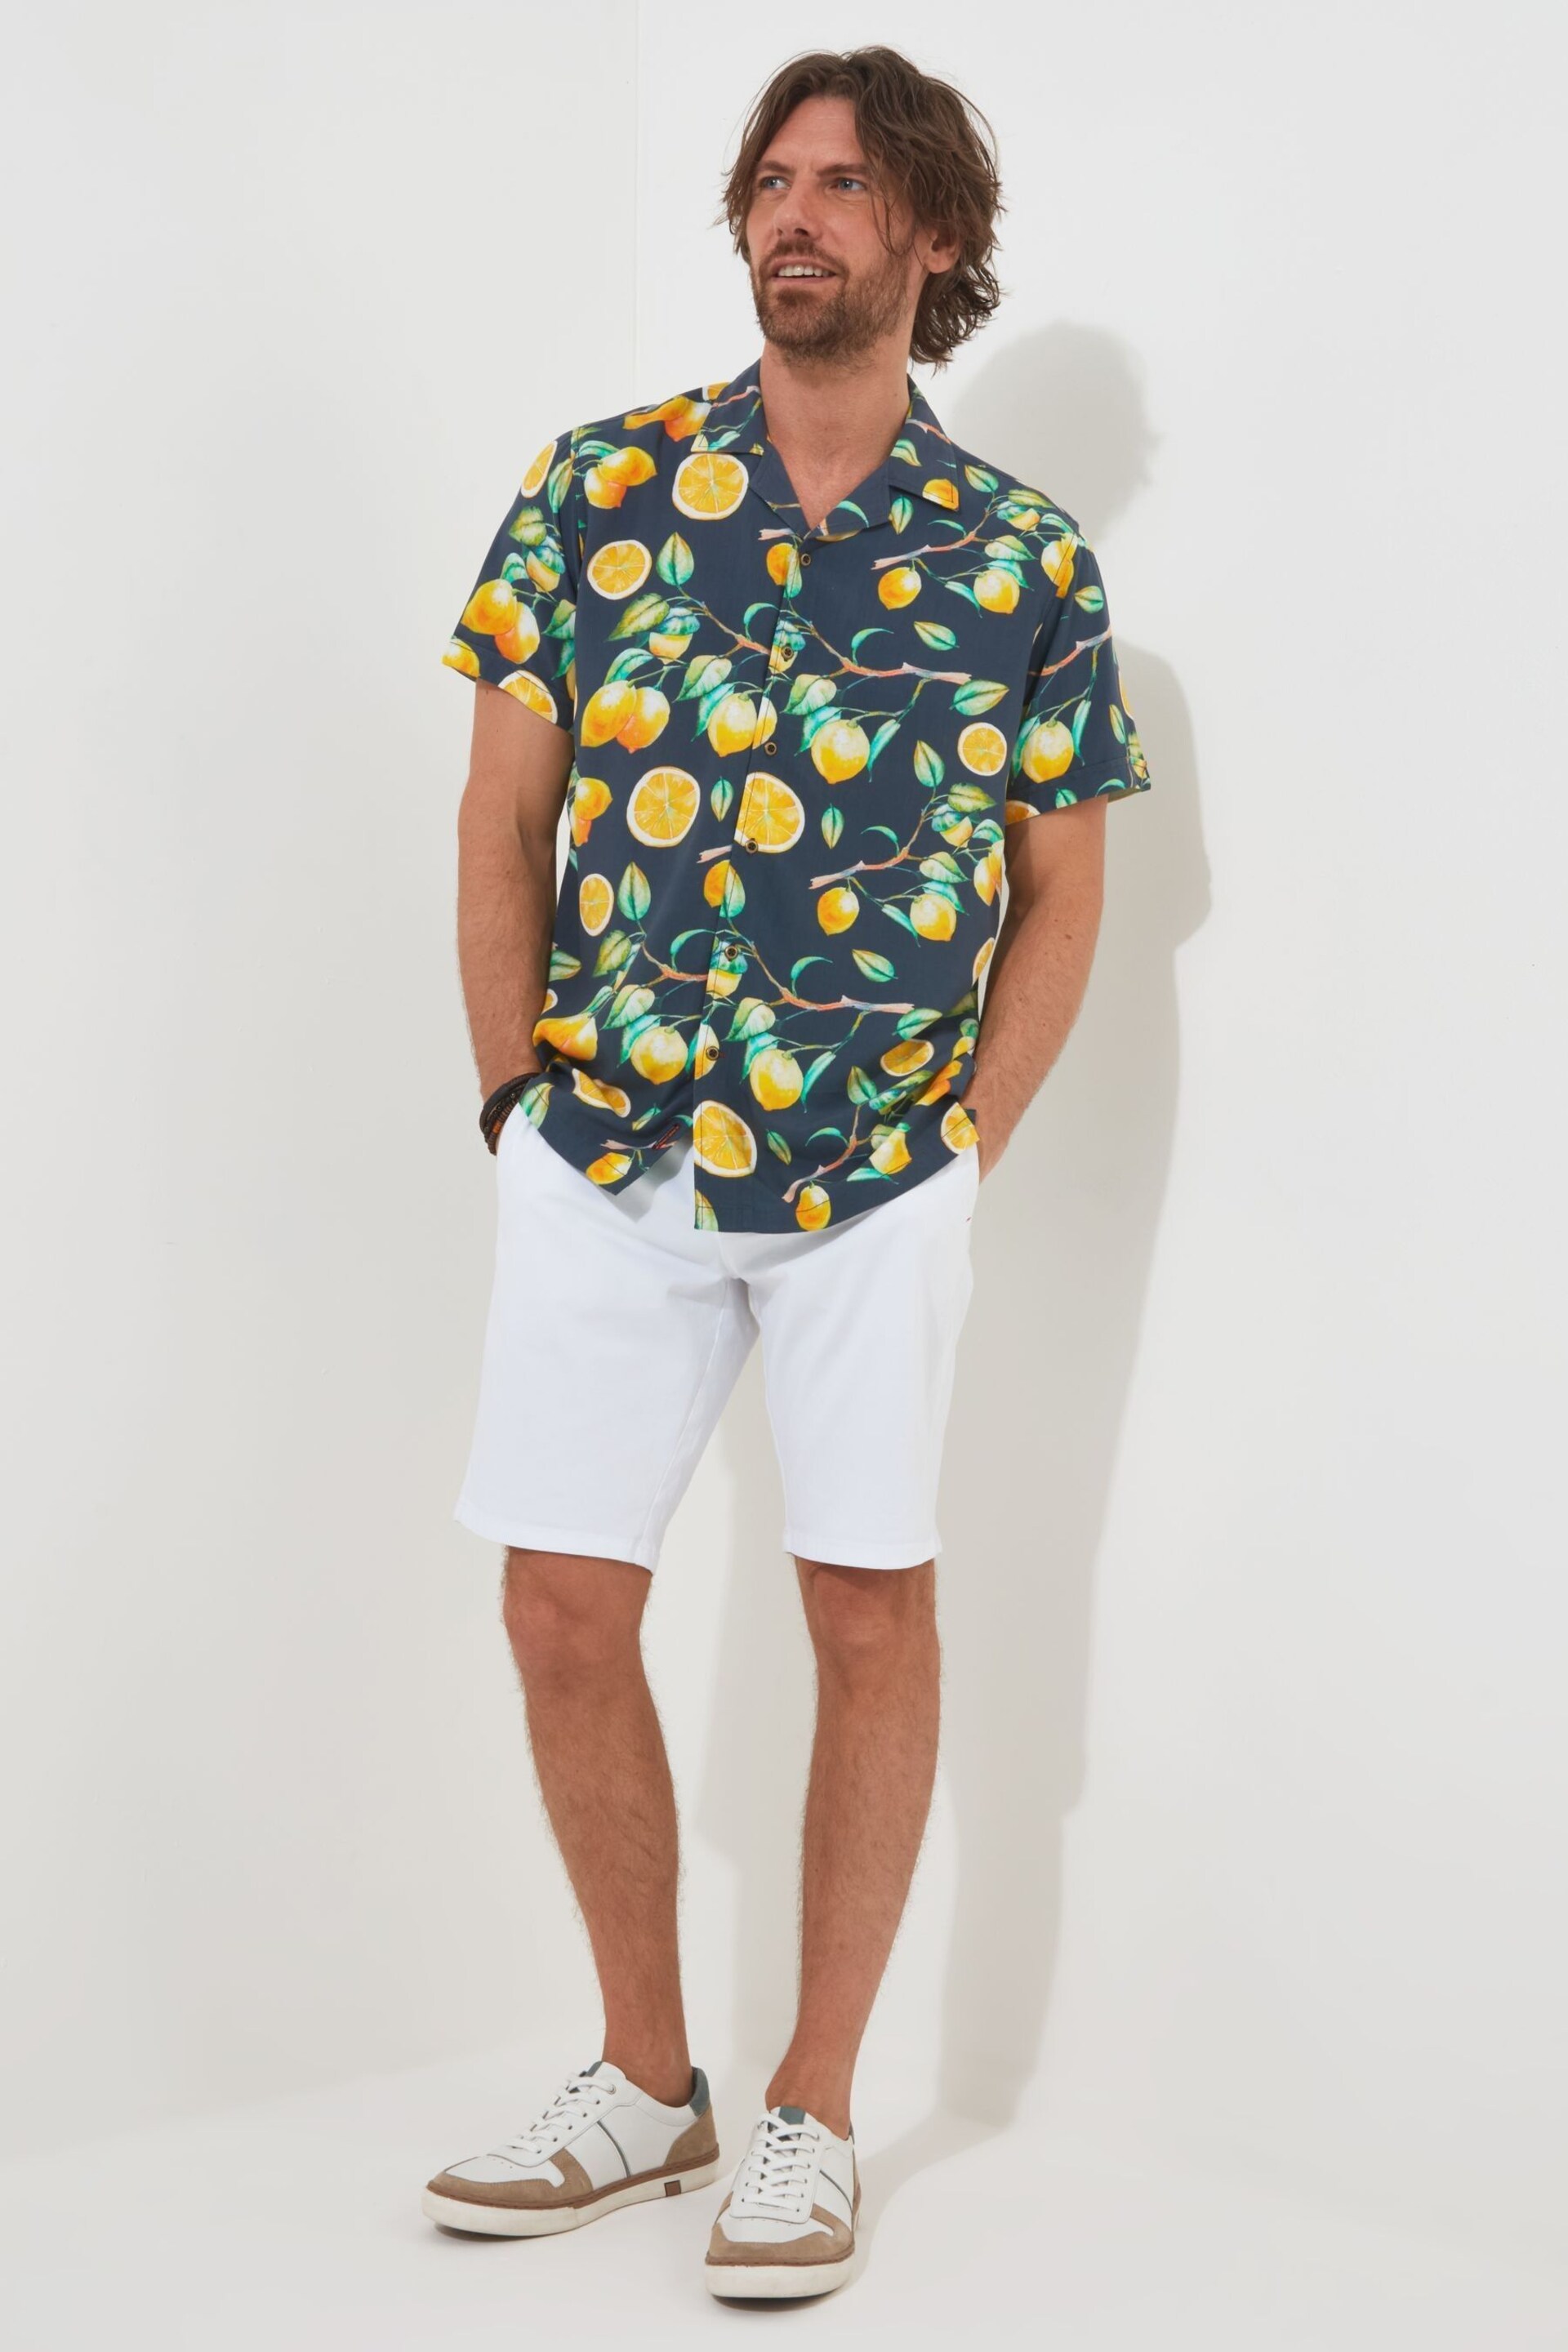 Joe Browns Black Lemon Printed Short Sleeve Open Flat Collar Shirt - Image 4 of 5